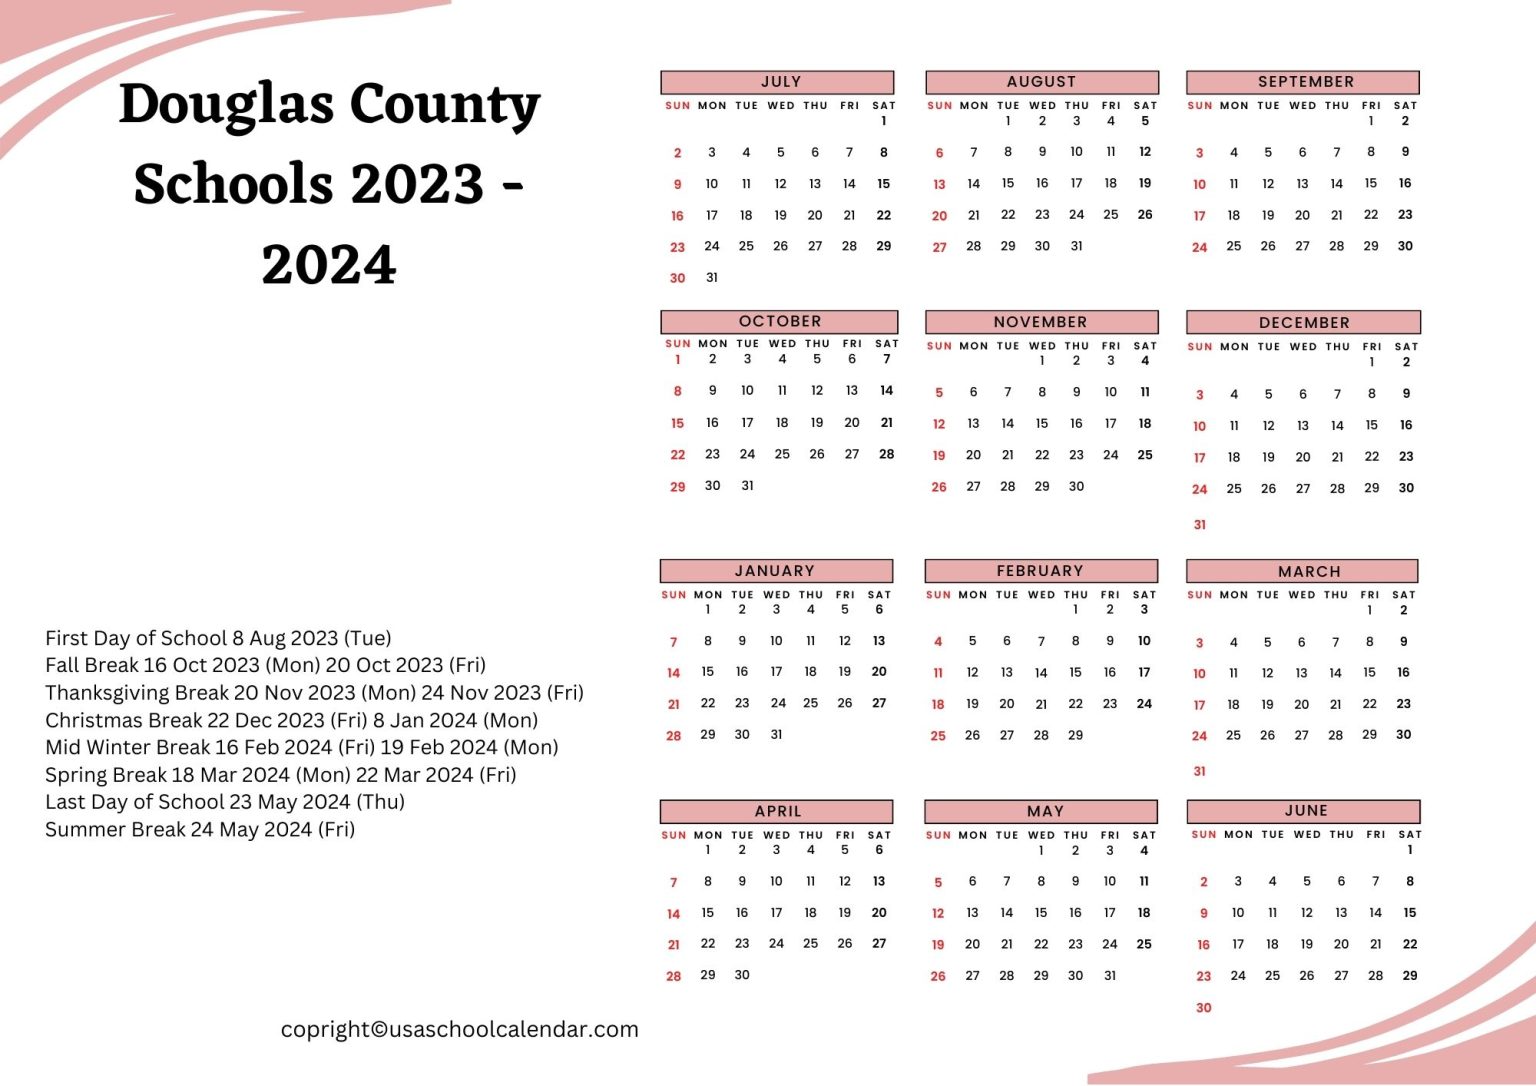 Douglas County Schools Calendar Holidays 2023-2024